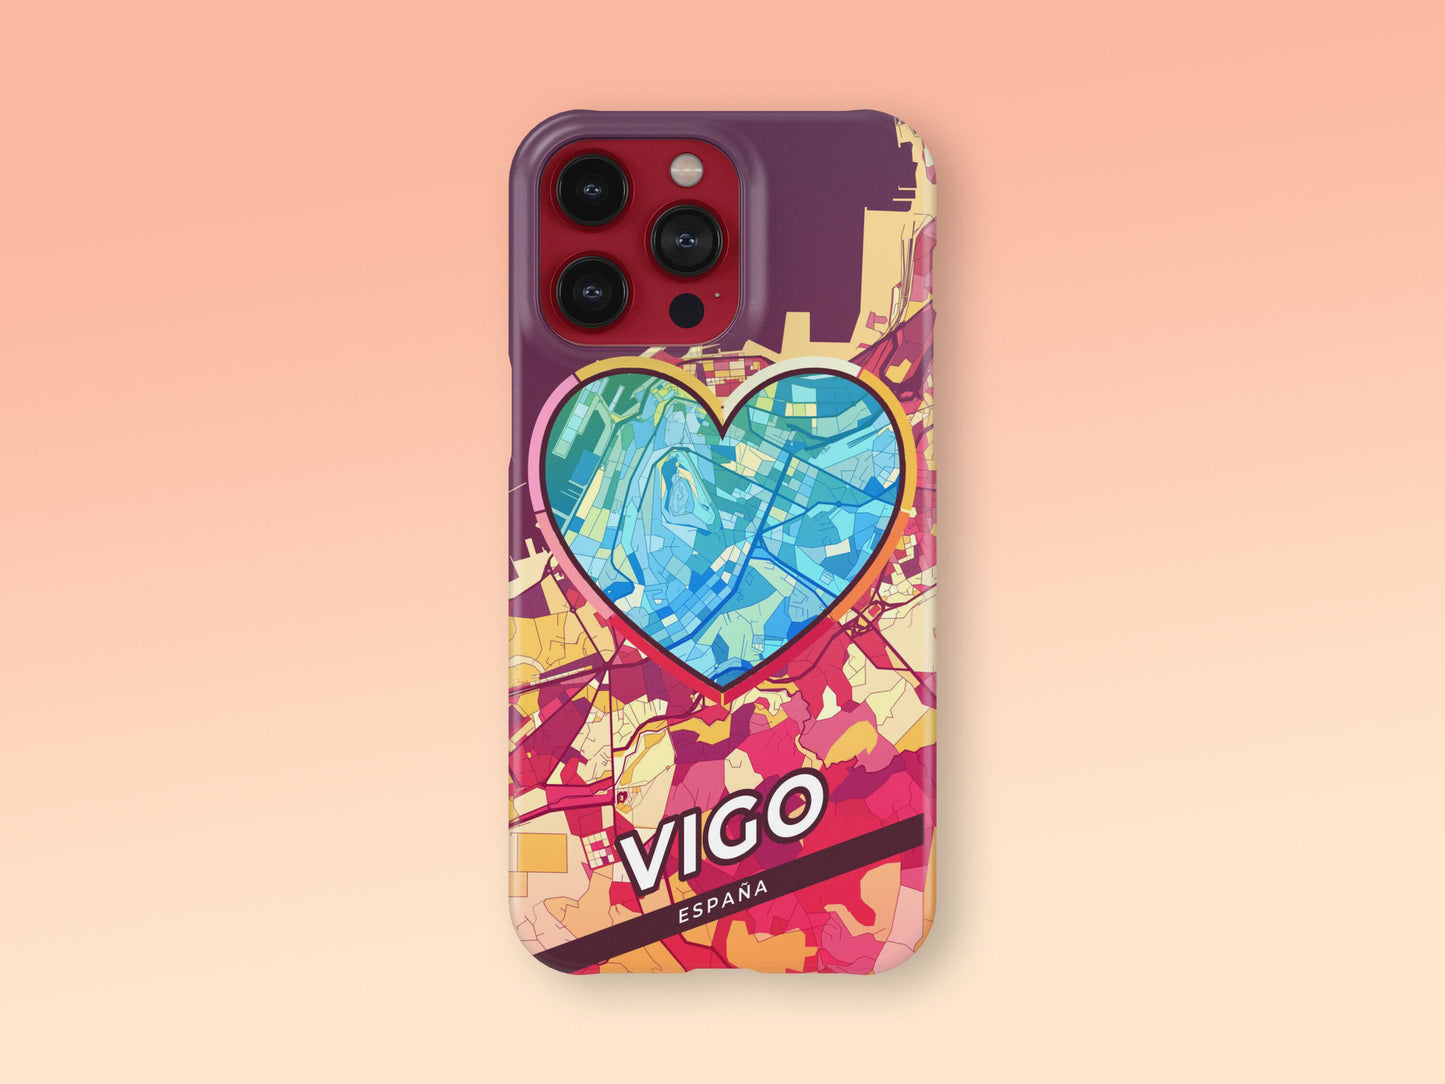 Vigo Spain slim phone case with colorful icon 2